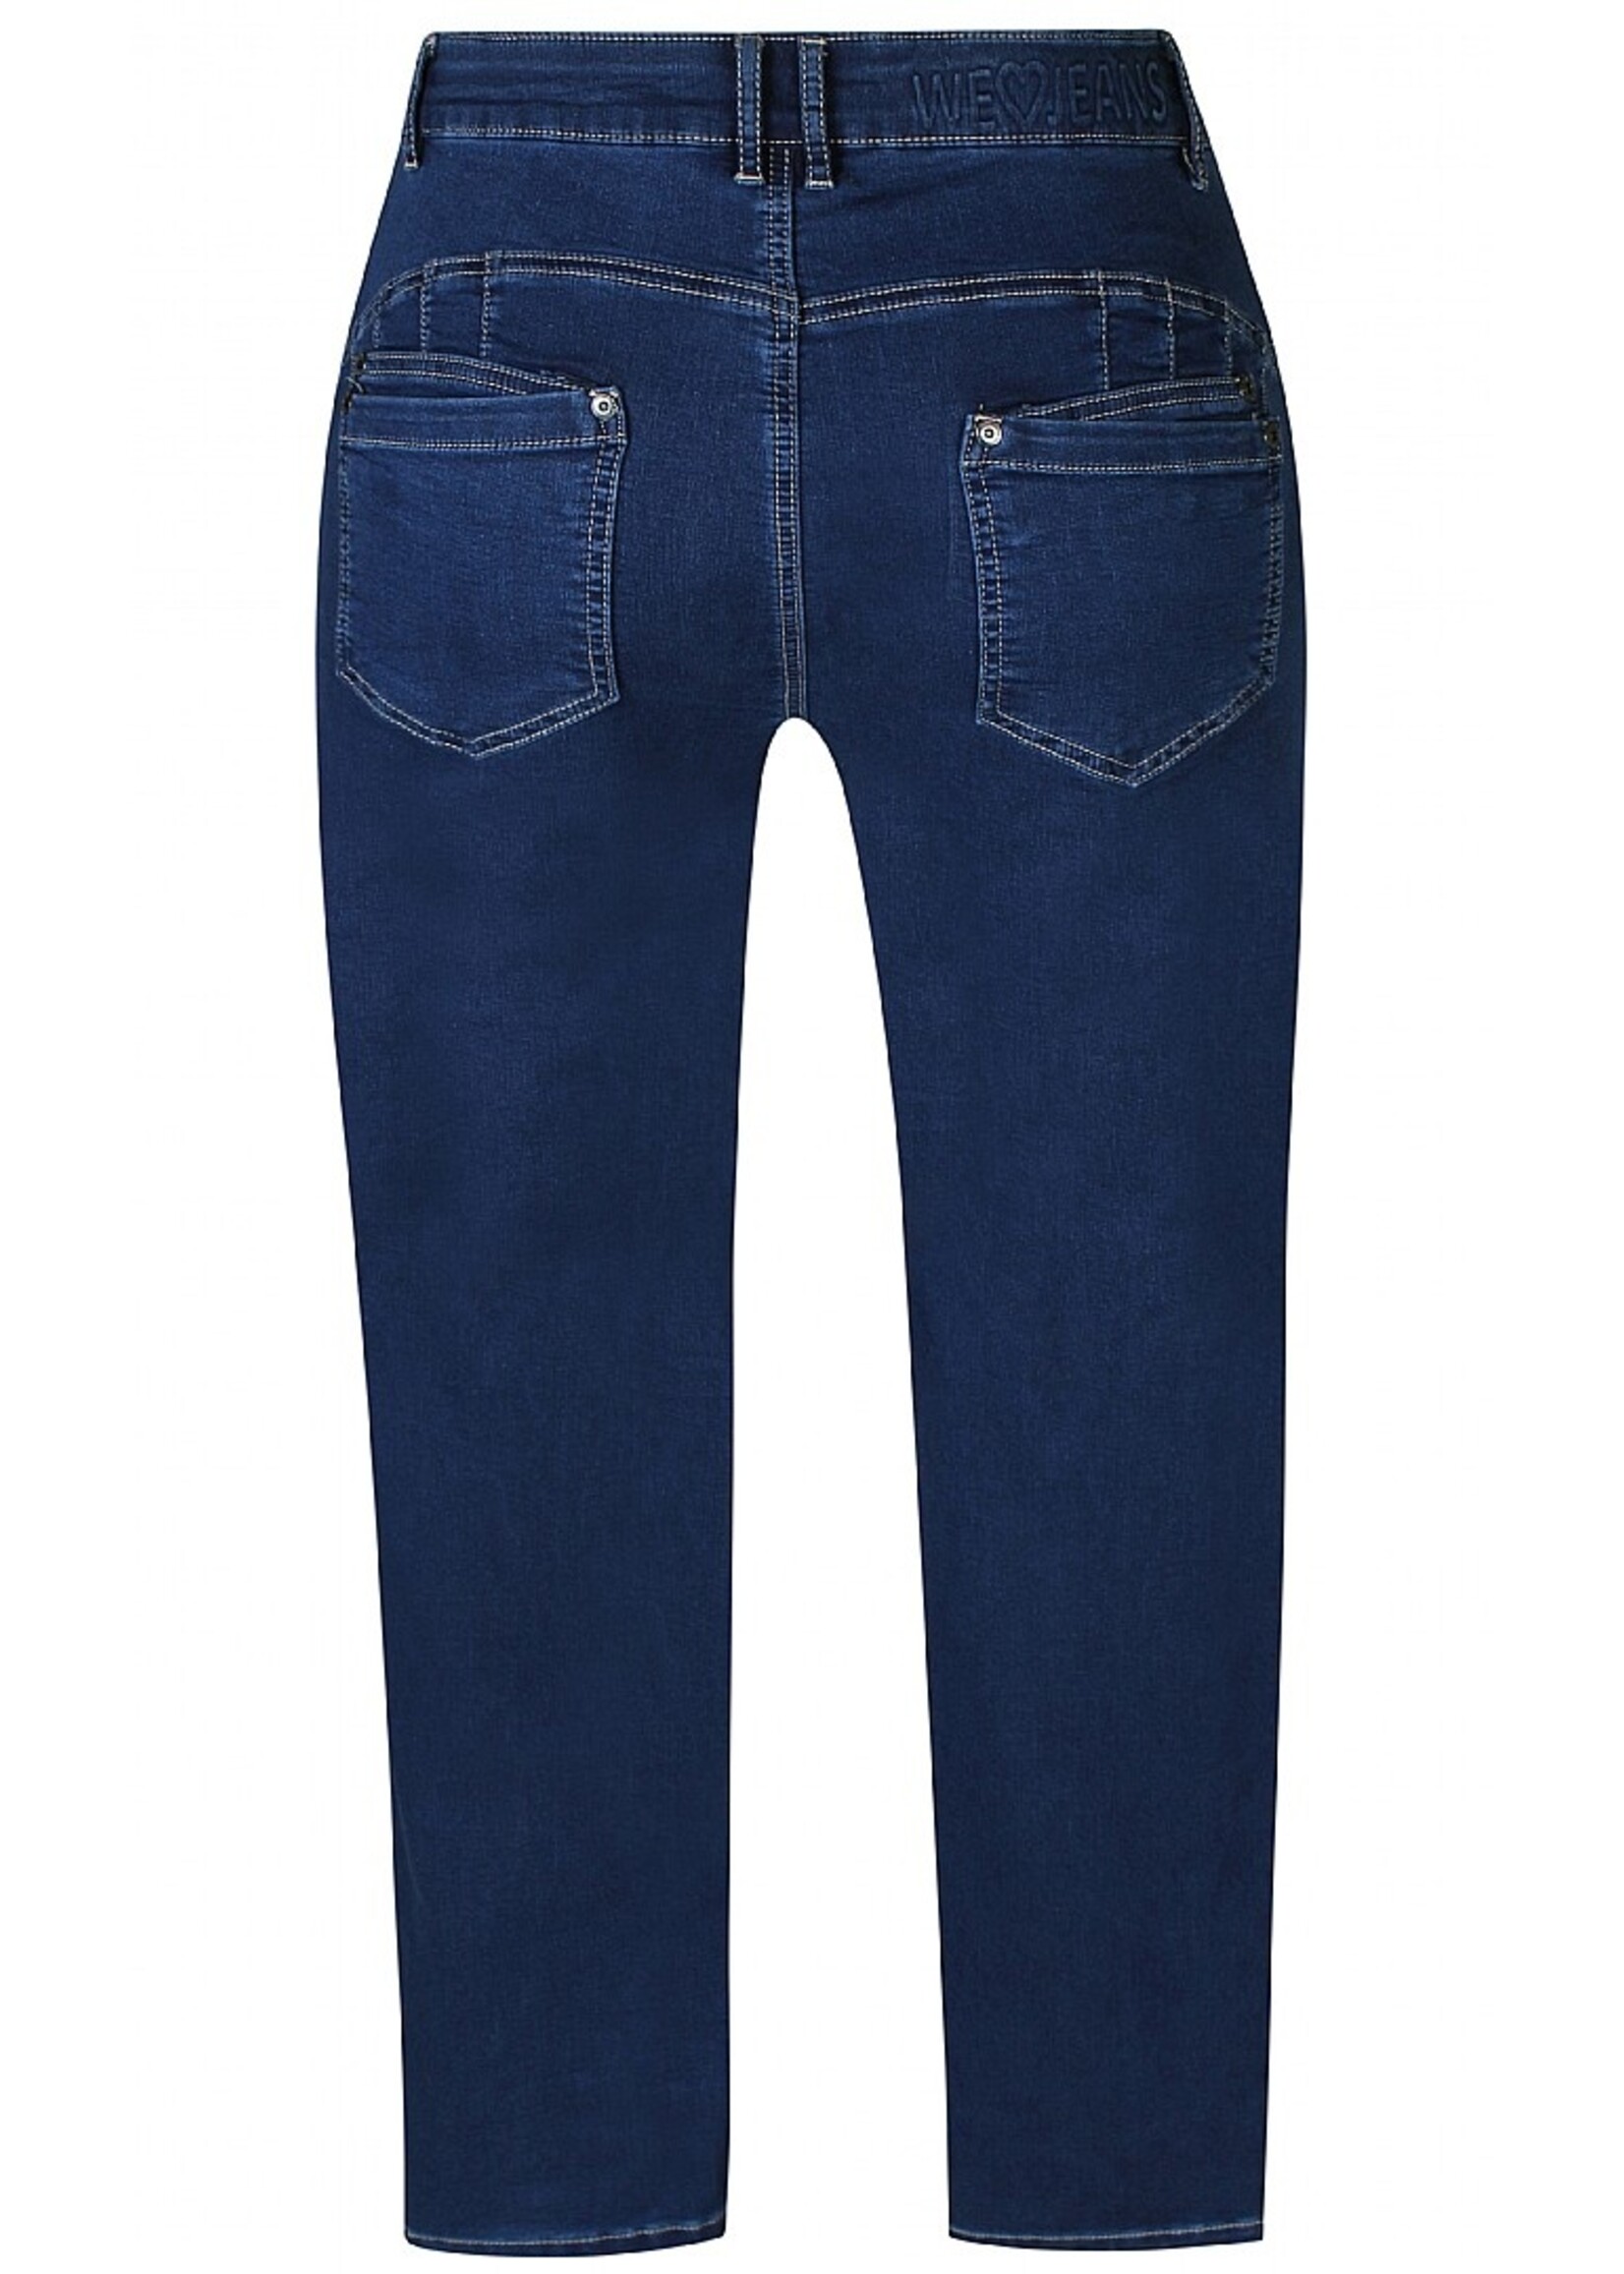 Zhenzi Curve jeans blauw